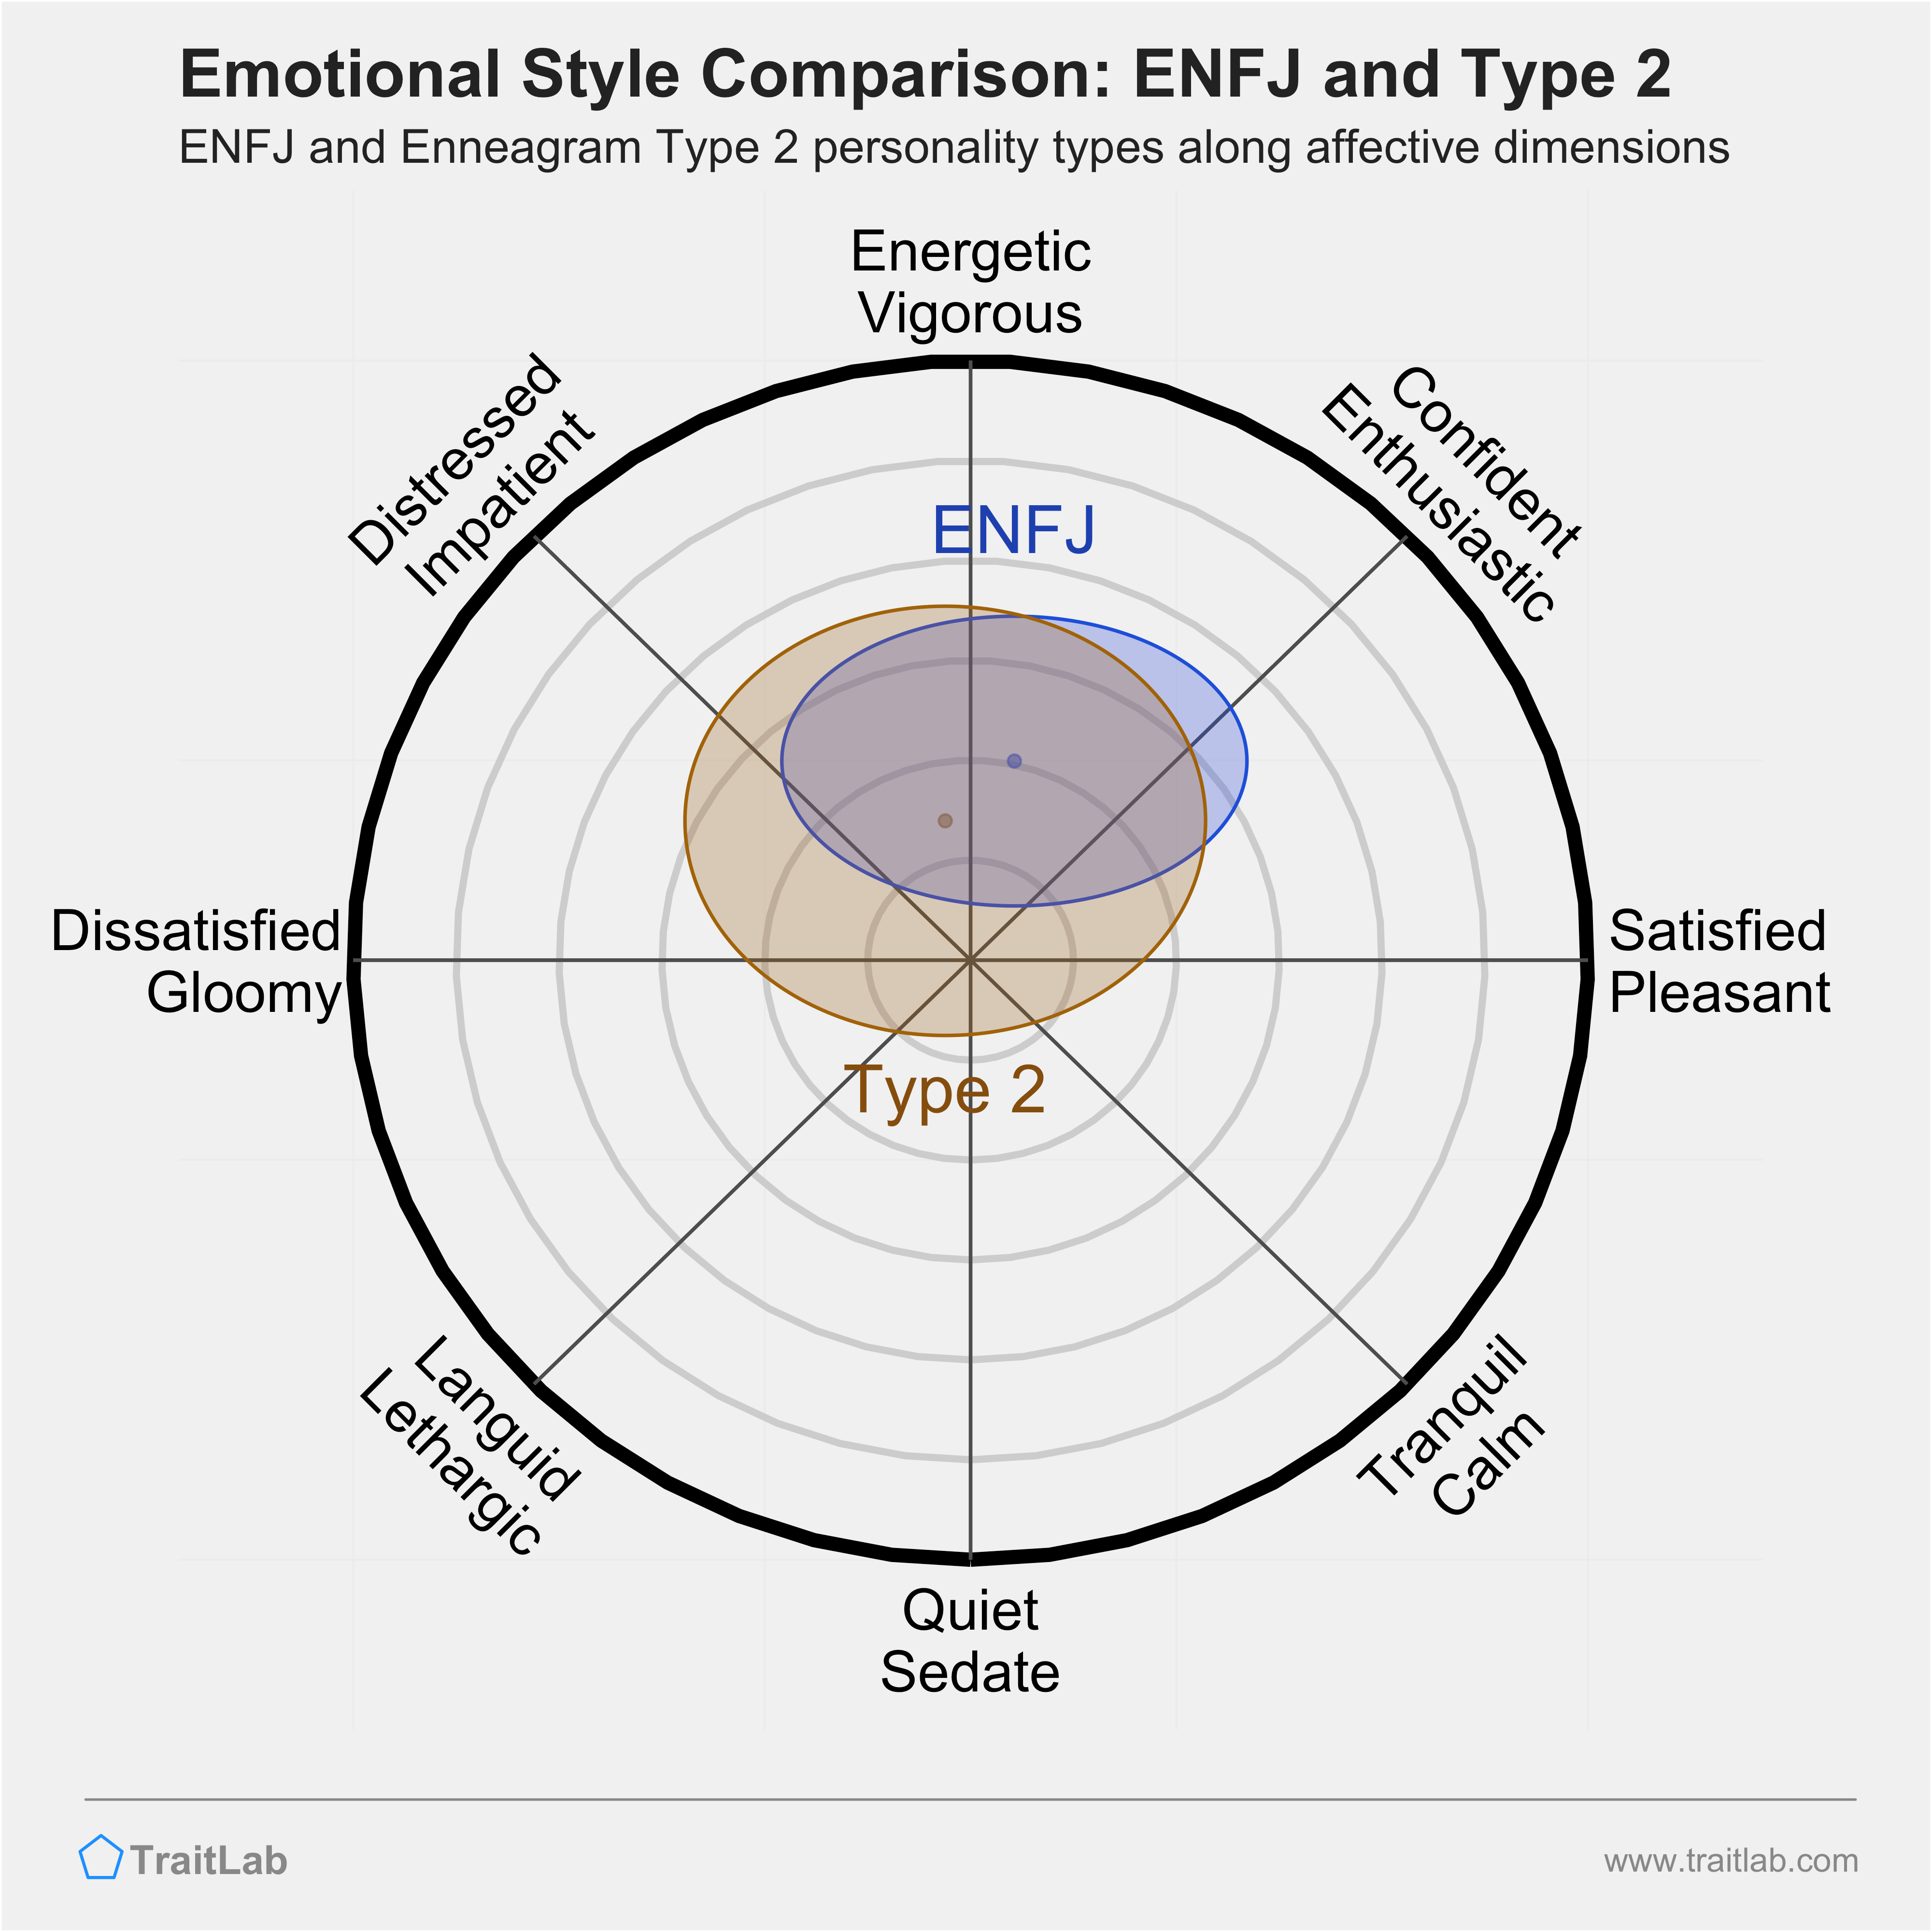 ENFJ and Type 2 comparison across emotional (affective) dimensions